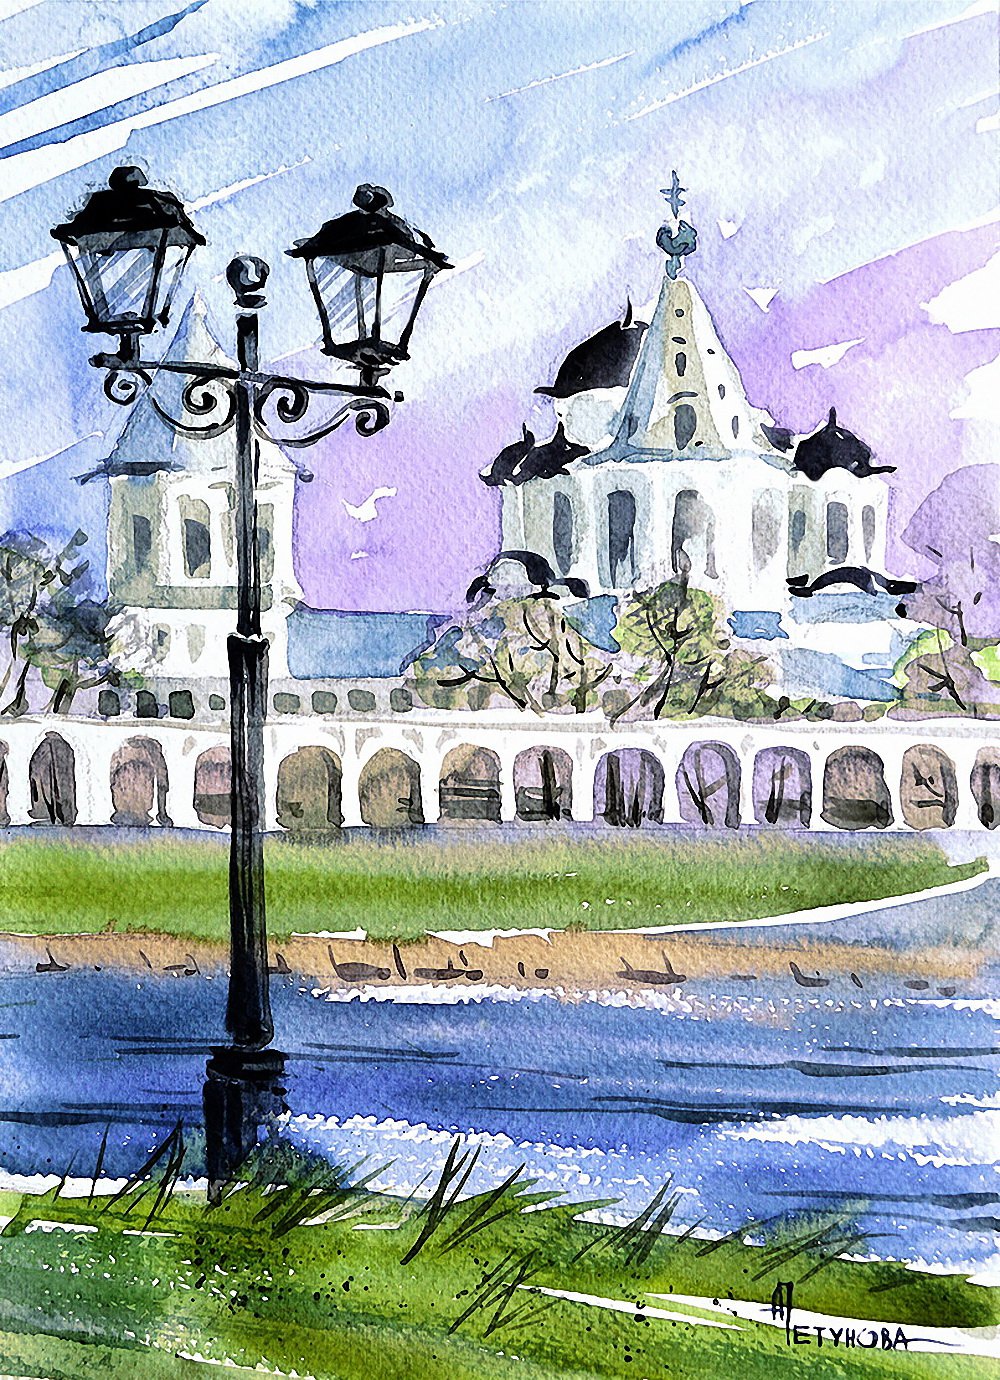 Нижний Новгород иллюстрации